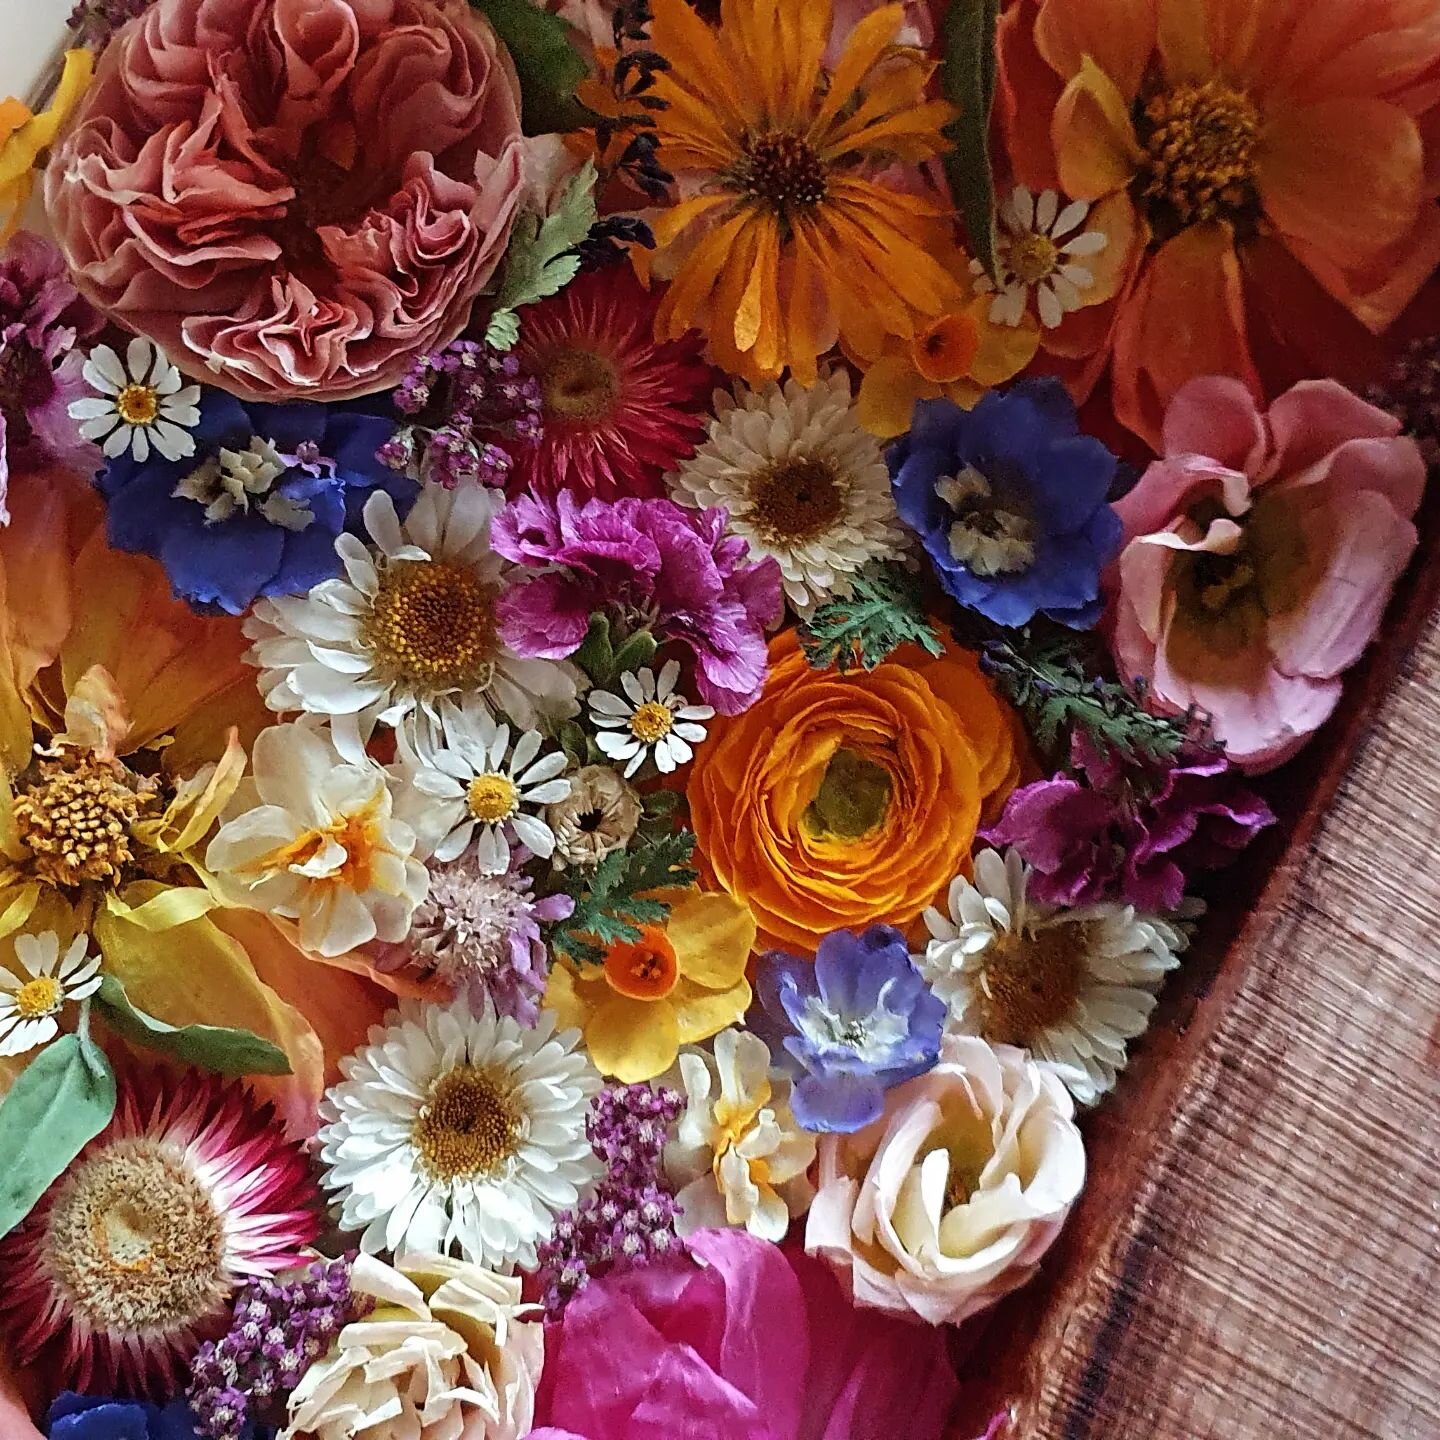 colour me happy 😍😍
.
.
.
.
#springflorals #springbride #keepsakes #sayitwithflowers #melbournebride #memories 
#resinart #resinartist #southaustralia #preservedbouquet #preservation #colourpop #colours